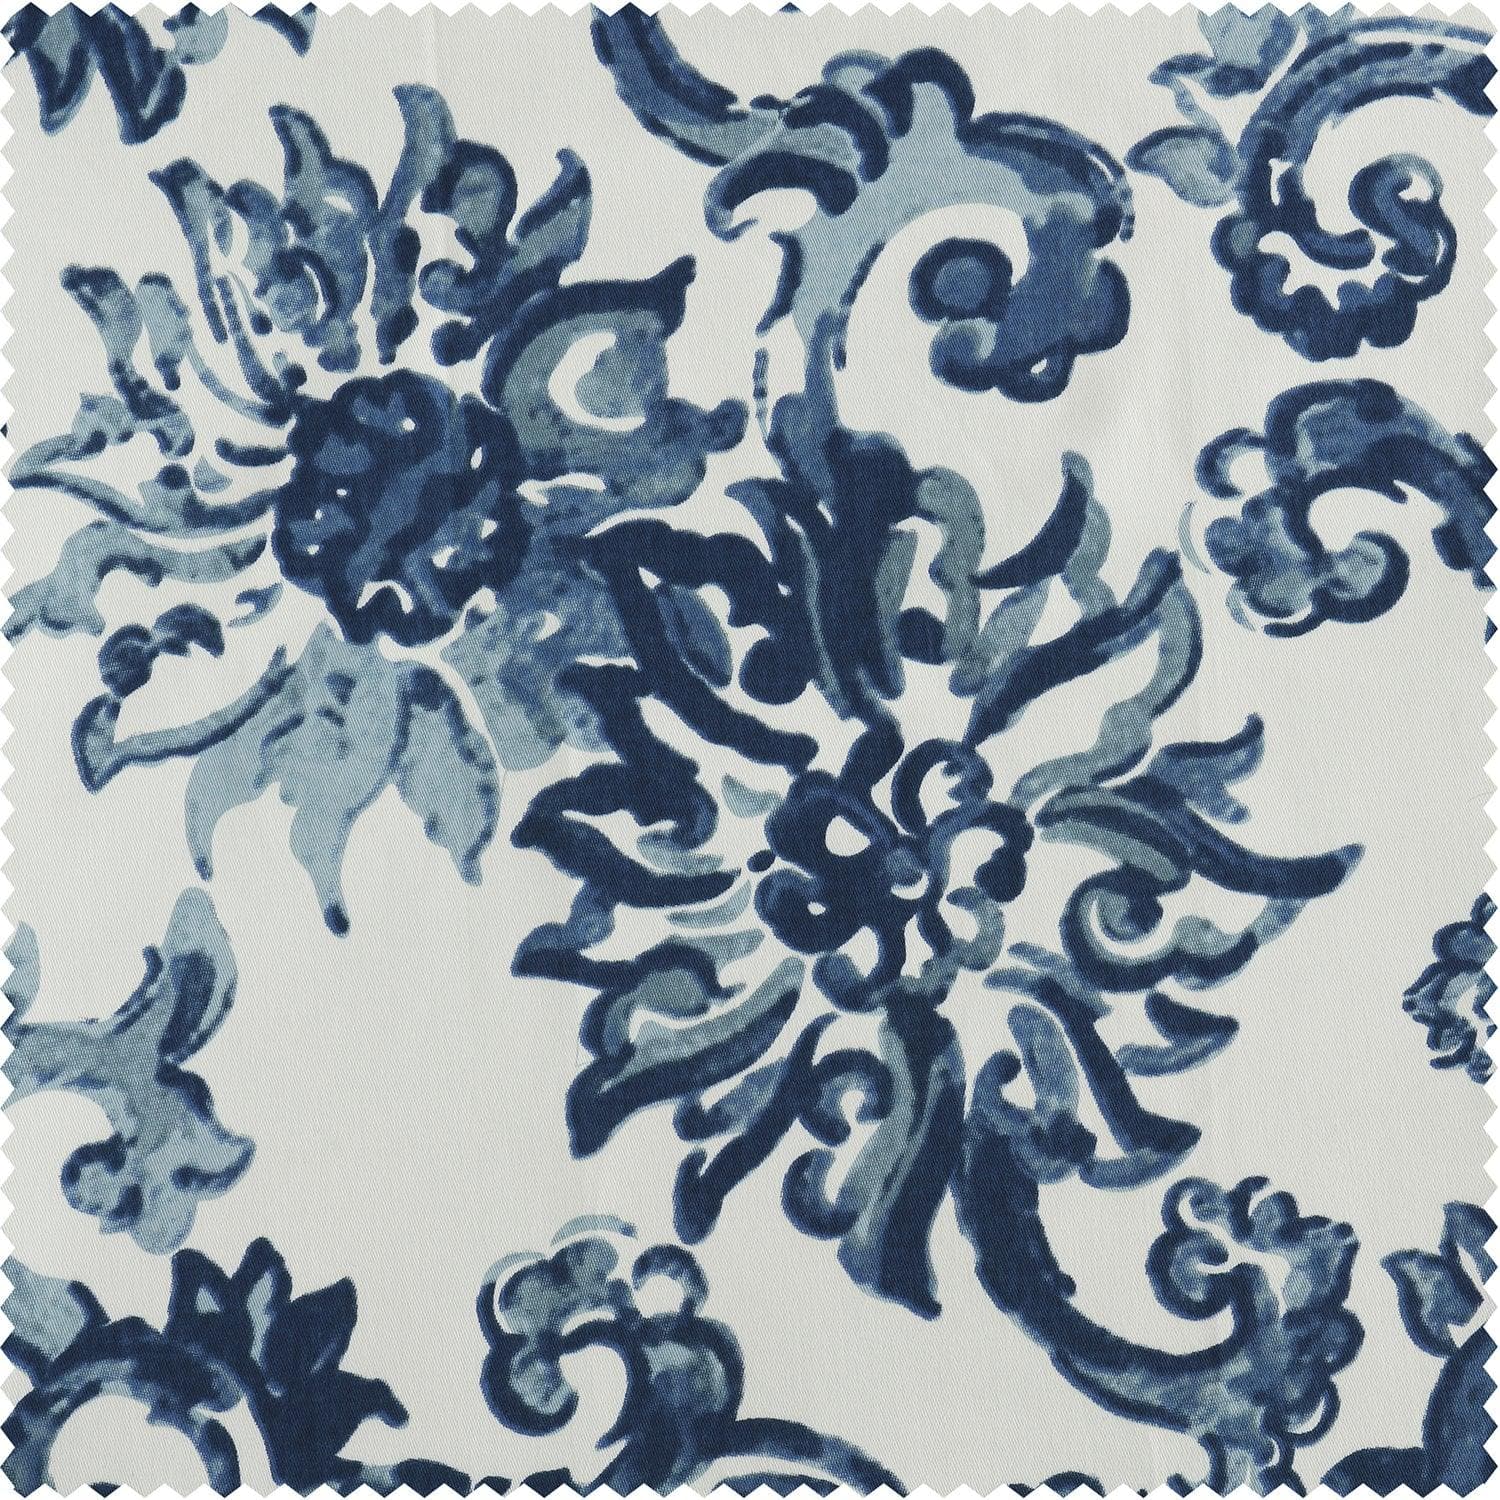 Indonesian Blue Printed Cotton Window Valance